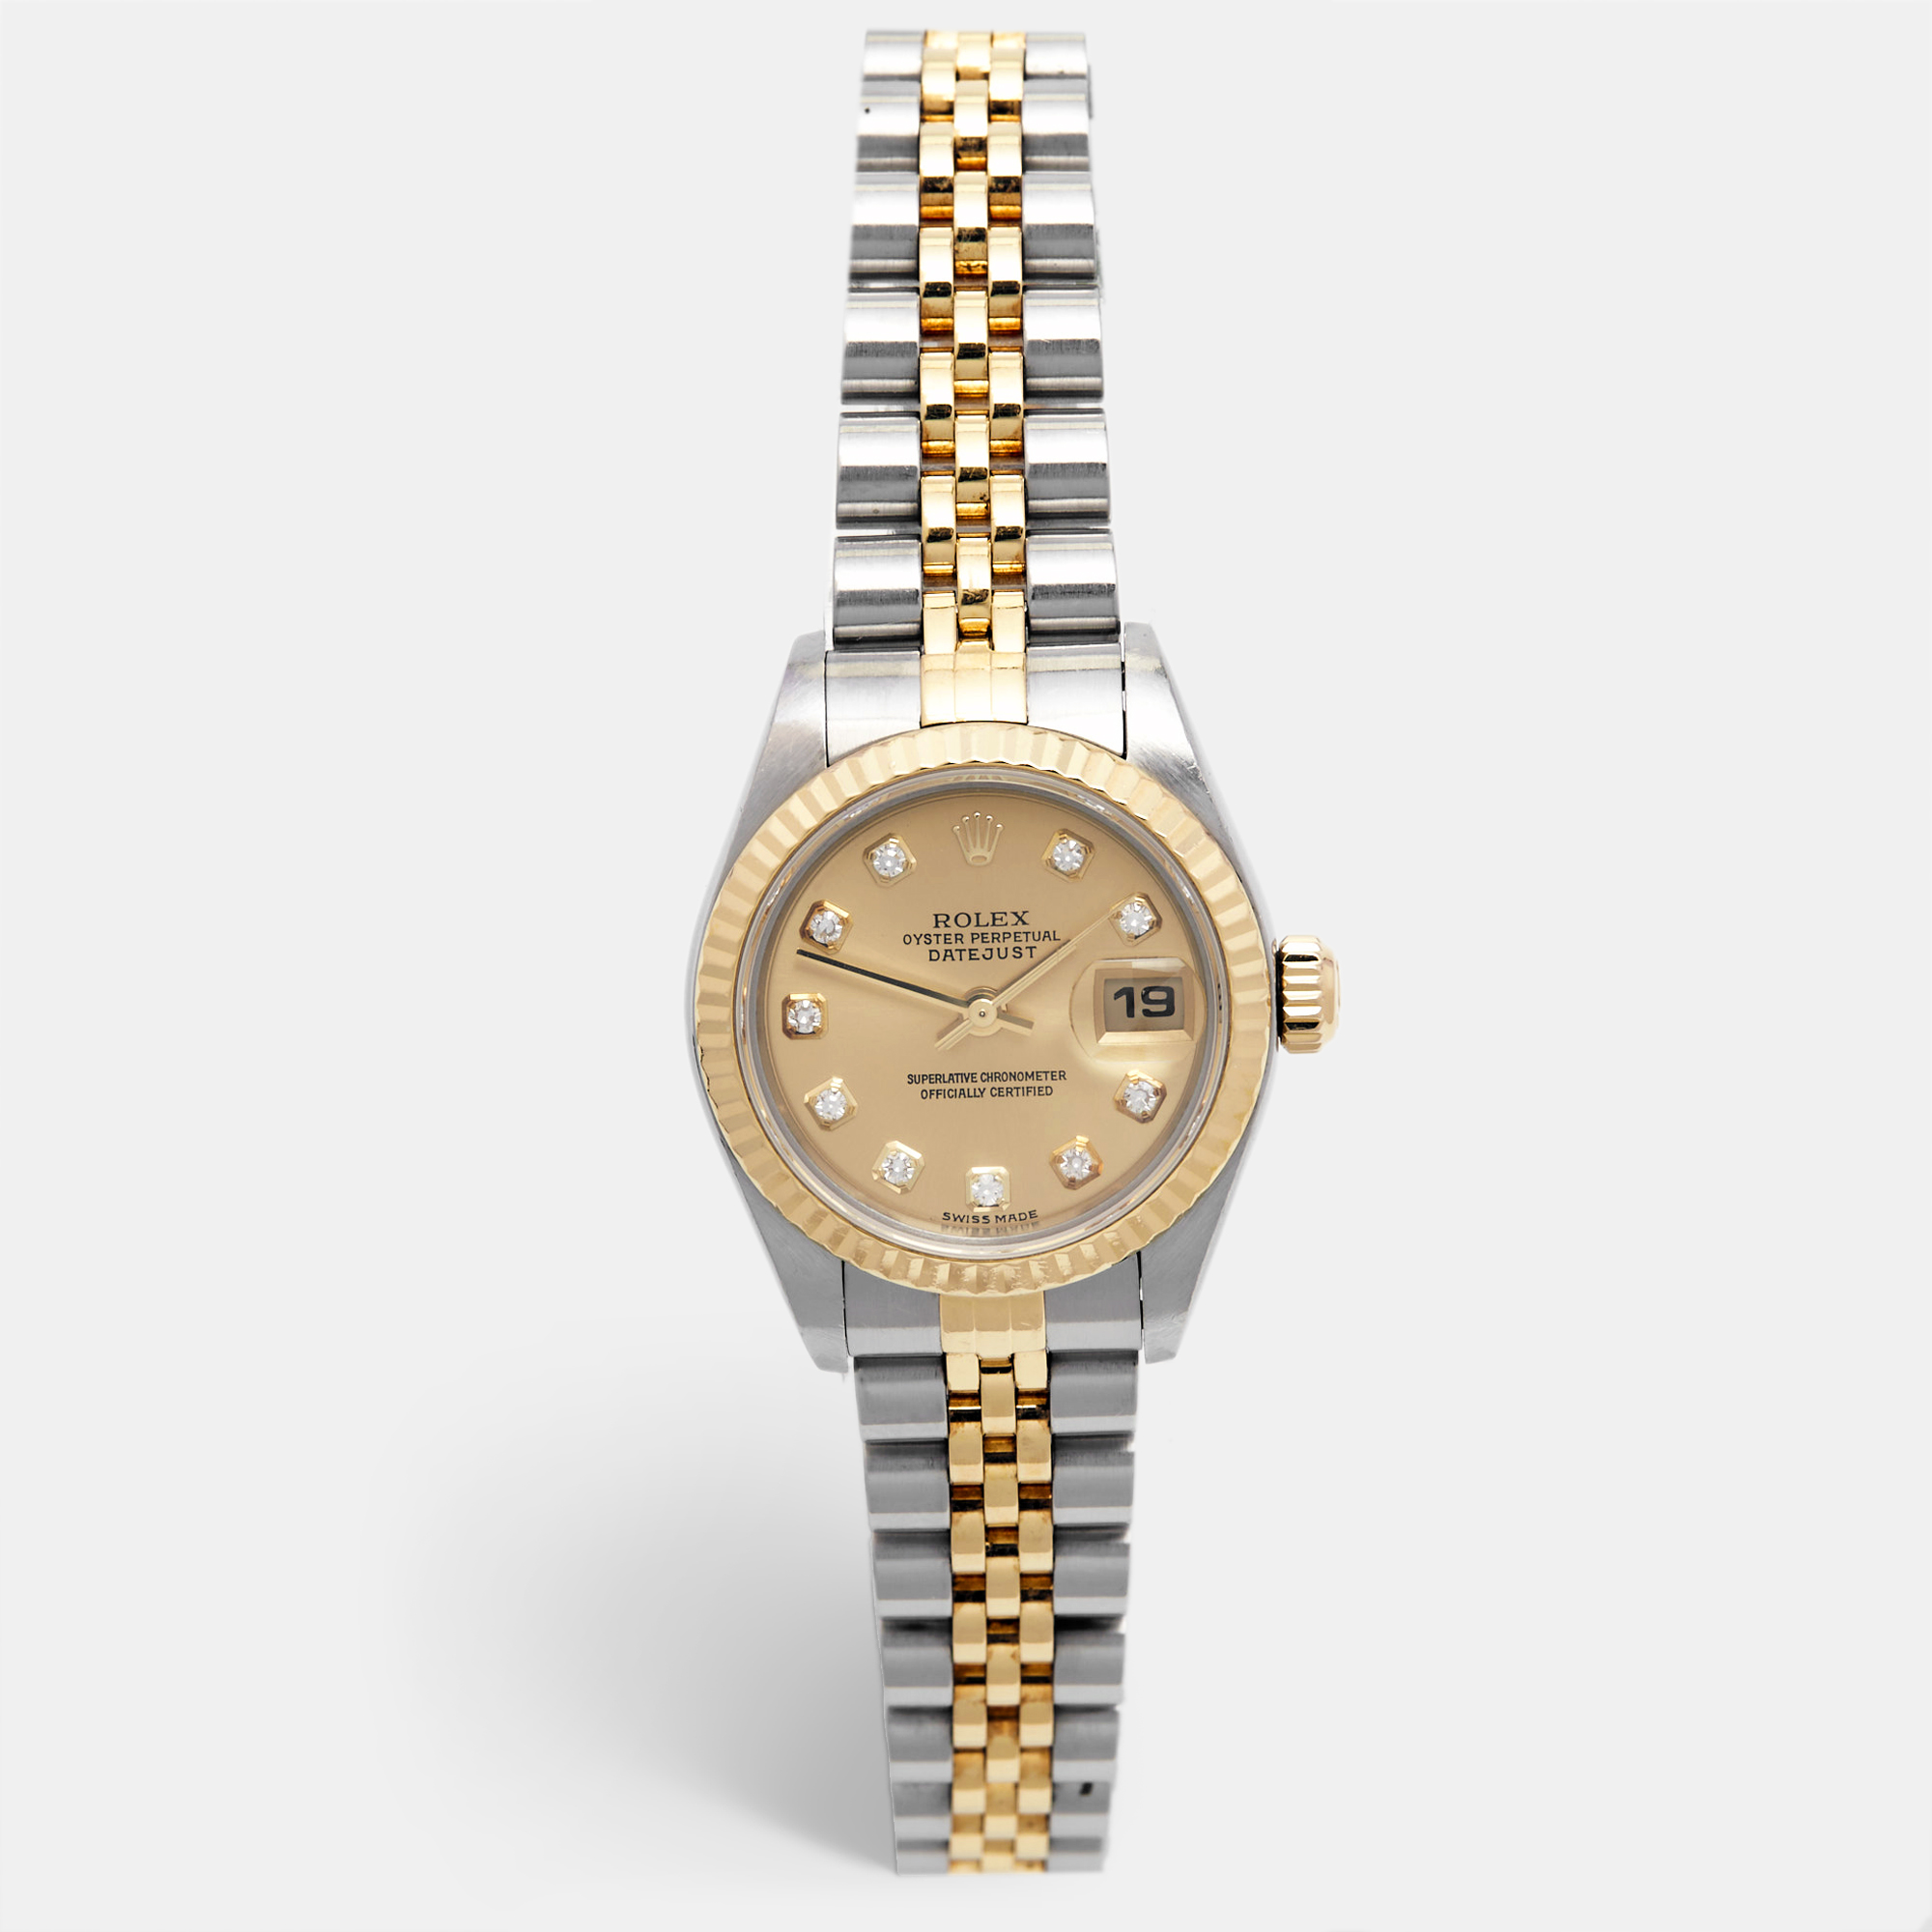 Rolex champagne diamond 18k yellow gold stainless steel datejust 79173 women's wristwatch 26 mm